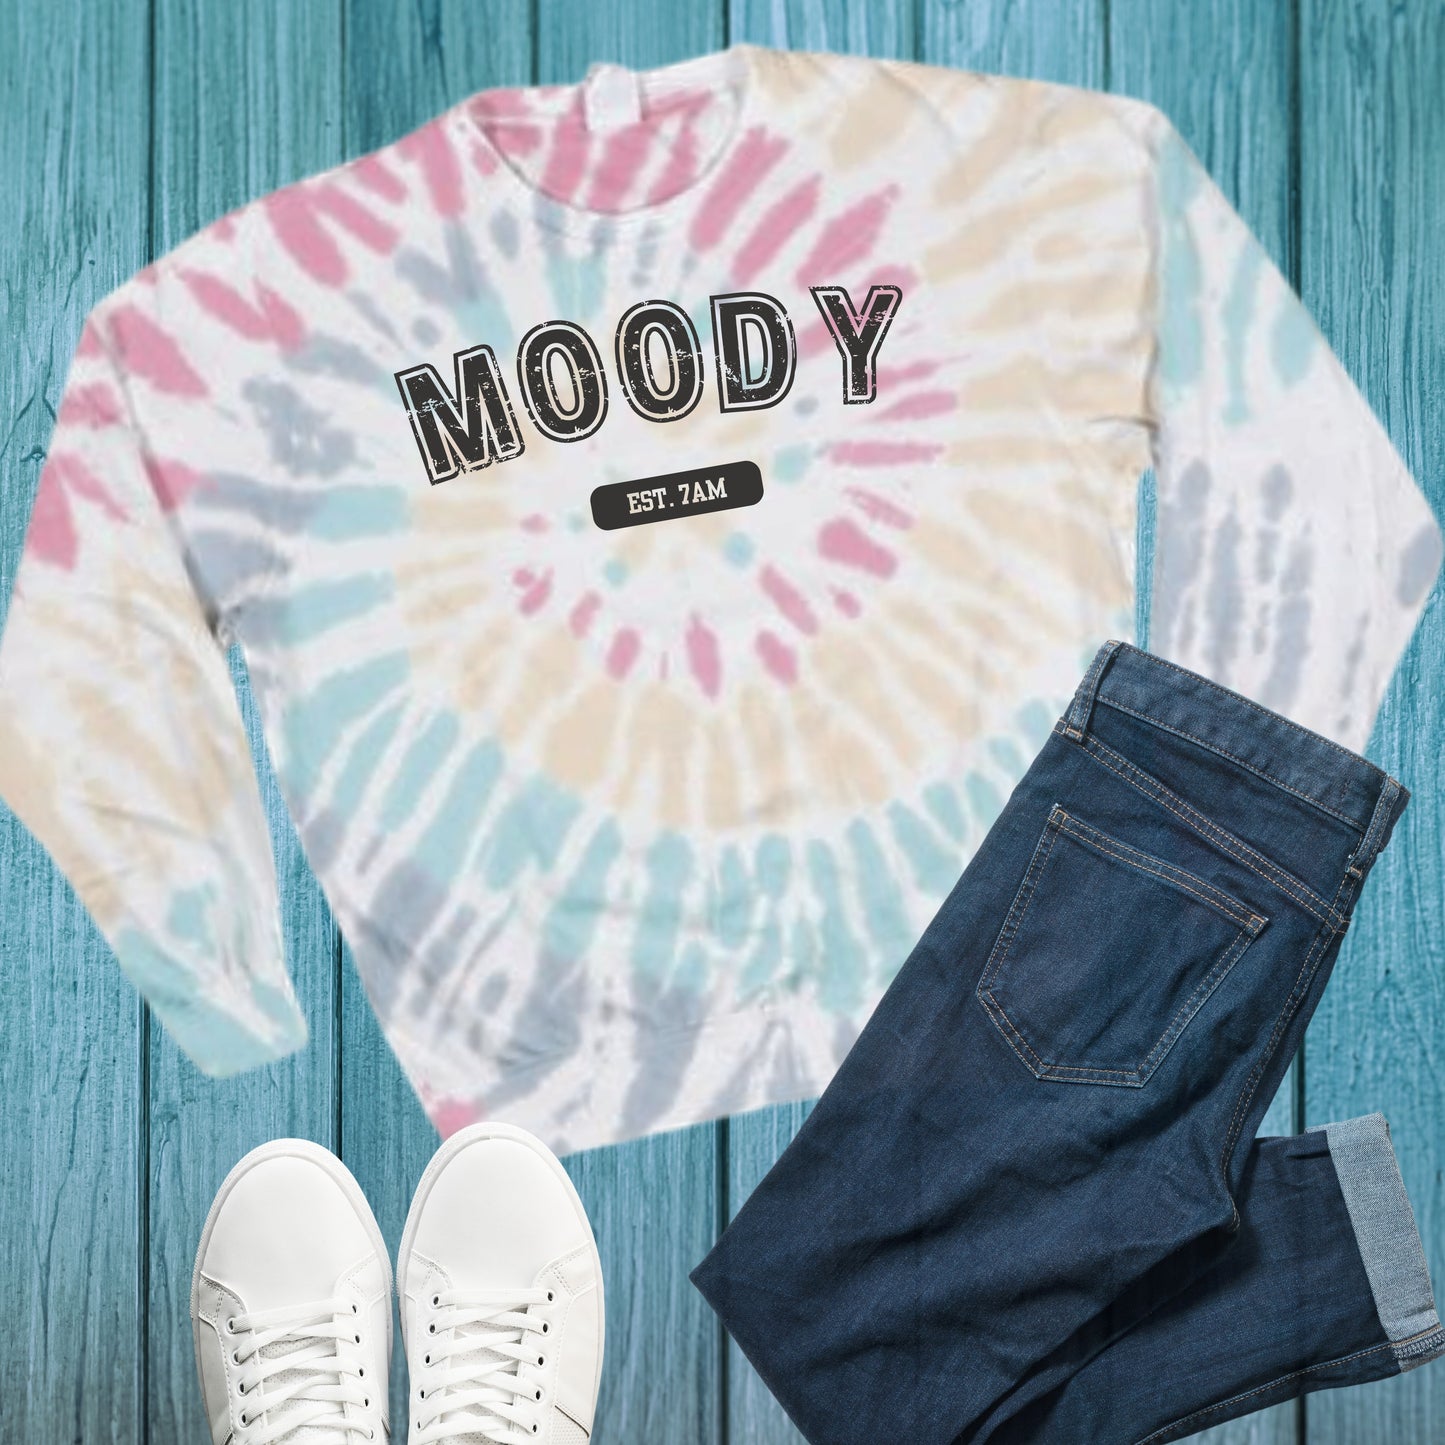 Moody EST 7AM Tie Dye Graphic Sweatshirt